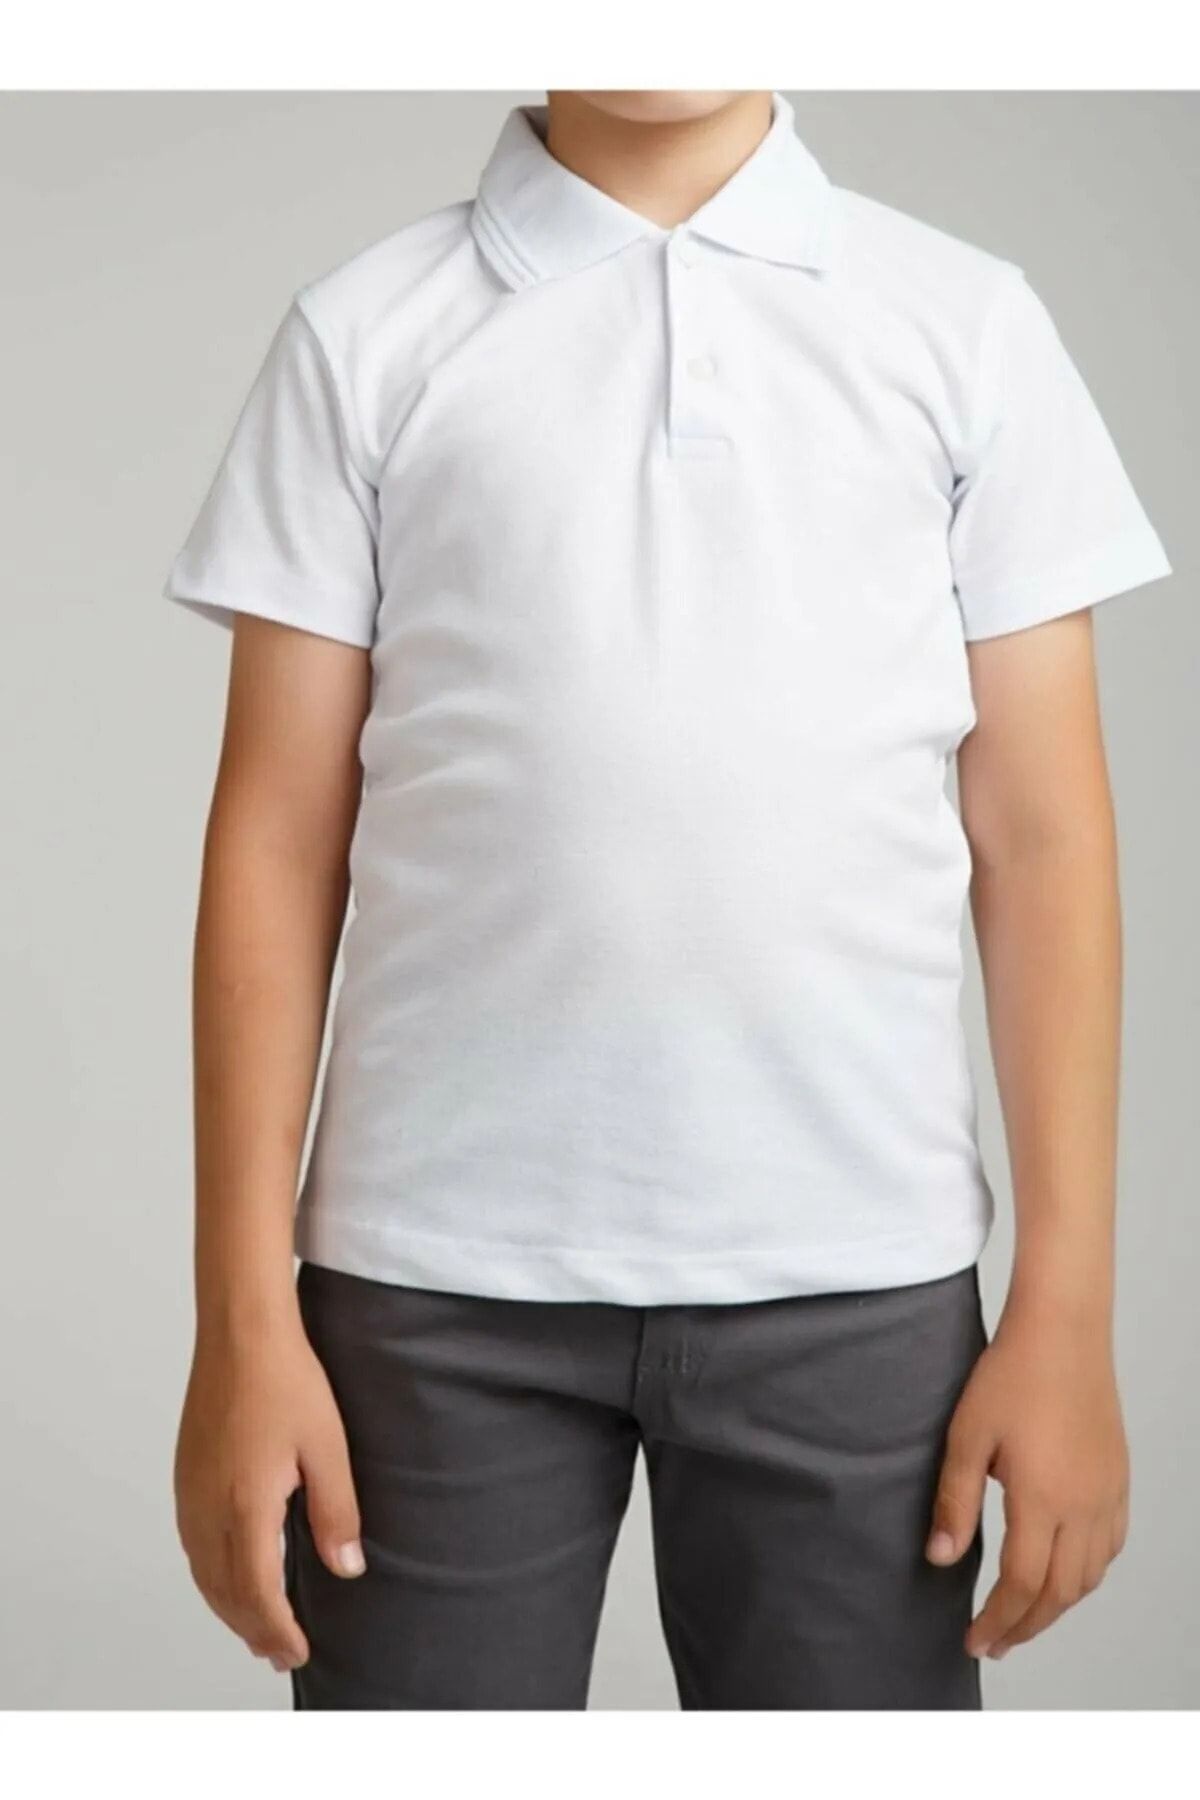 Nacar Unisex Çocuk Polo Yaka Kısa Kol Okul T-shirt Okul